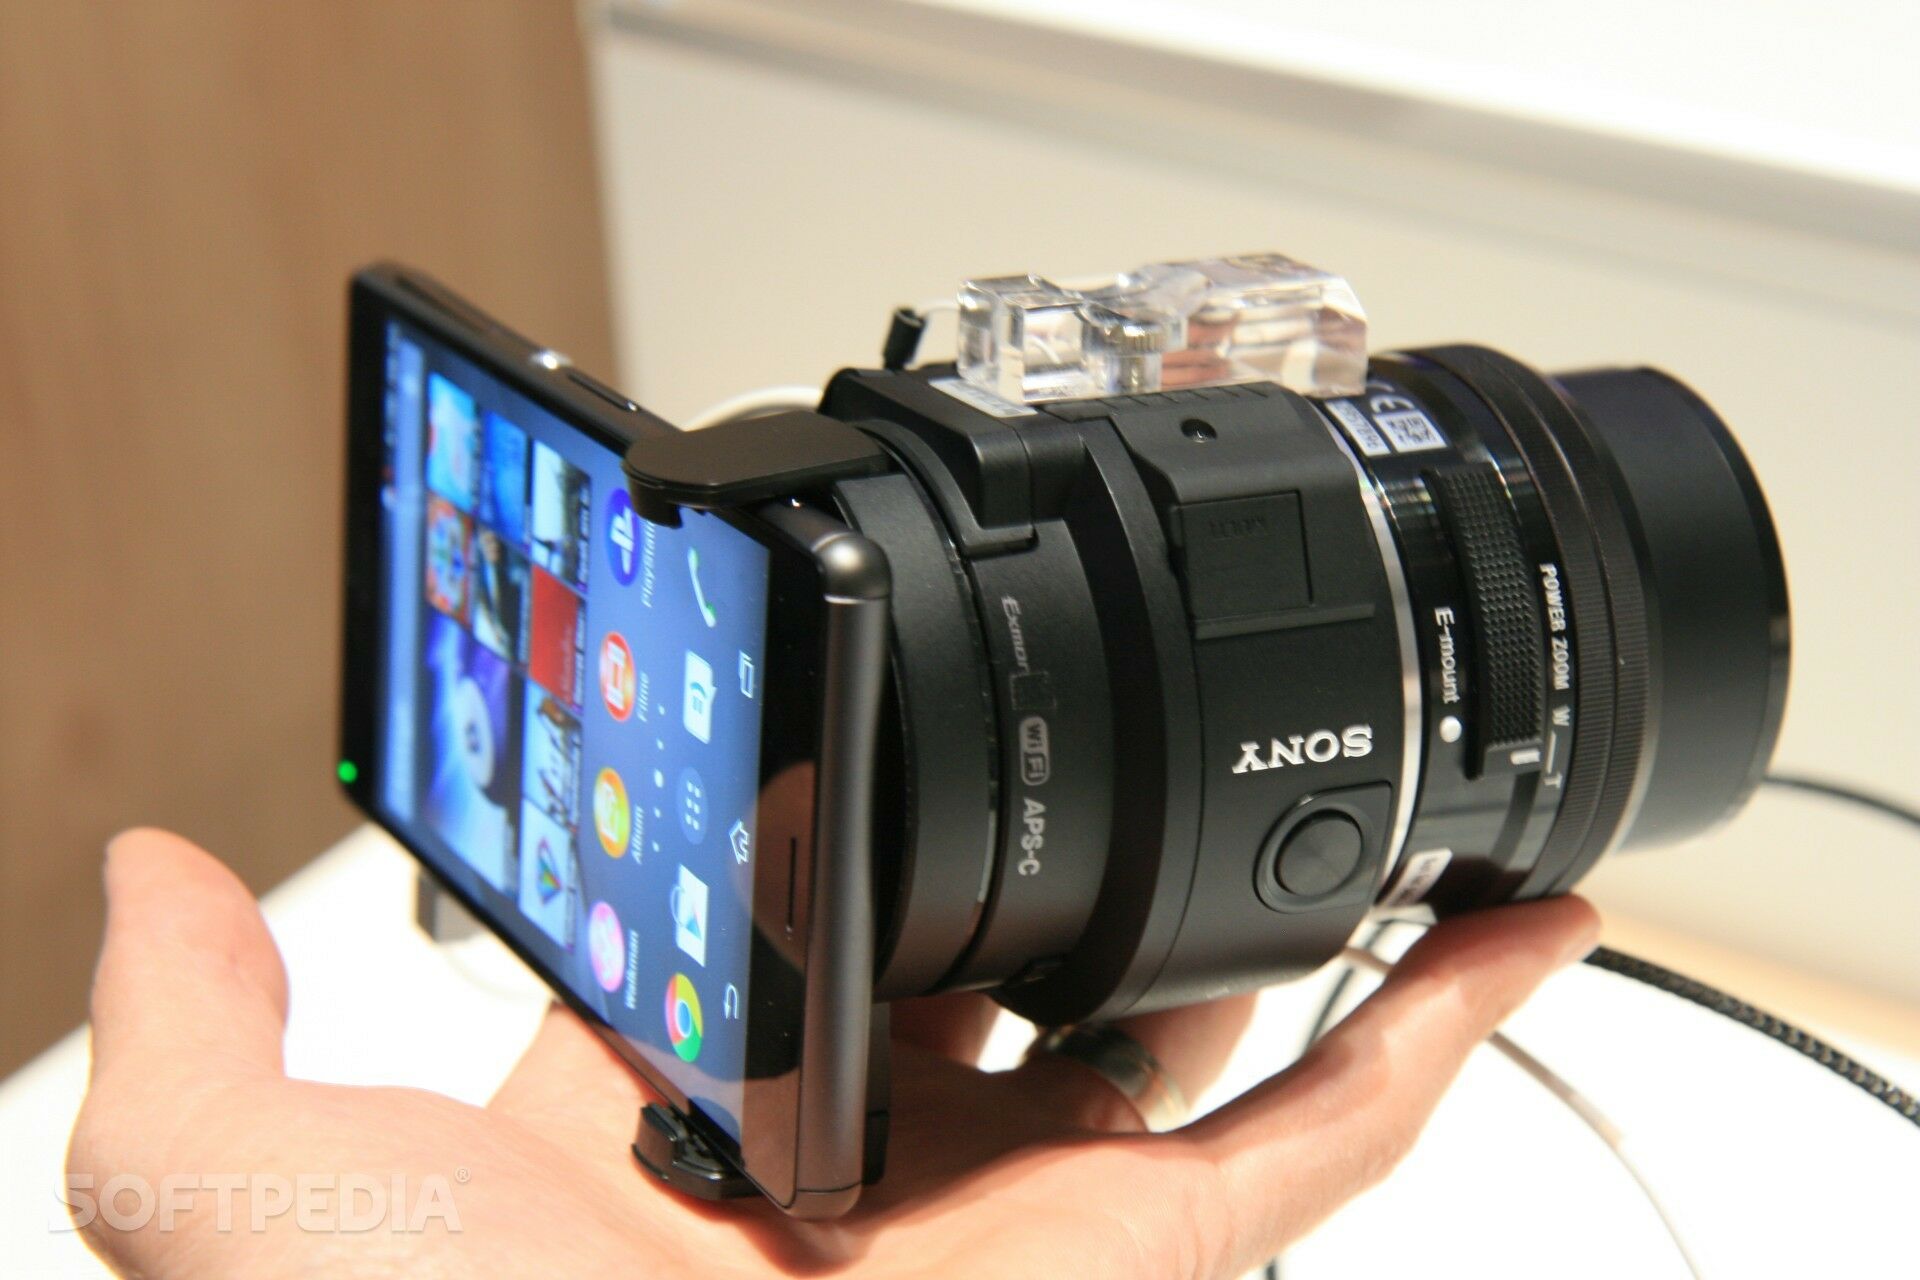 Самый качественный камера. Sony qx1. Sony Ilce-qx1. Sony SMARTSHOT Ilce-qx1. Sony icle-qx1 e-Mount Interchangeable Lens Camera at IFA 2014.